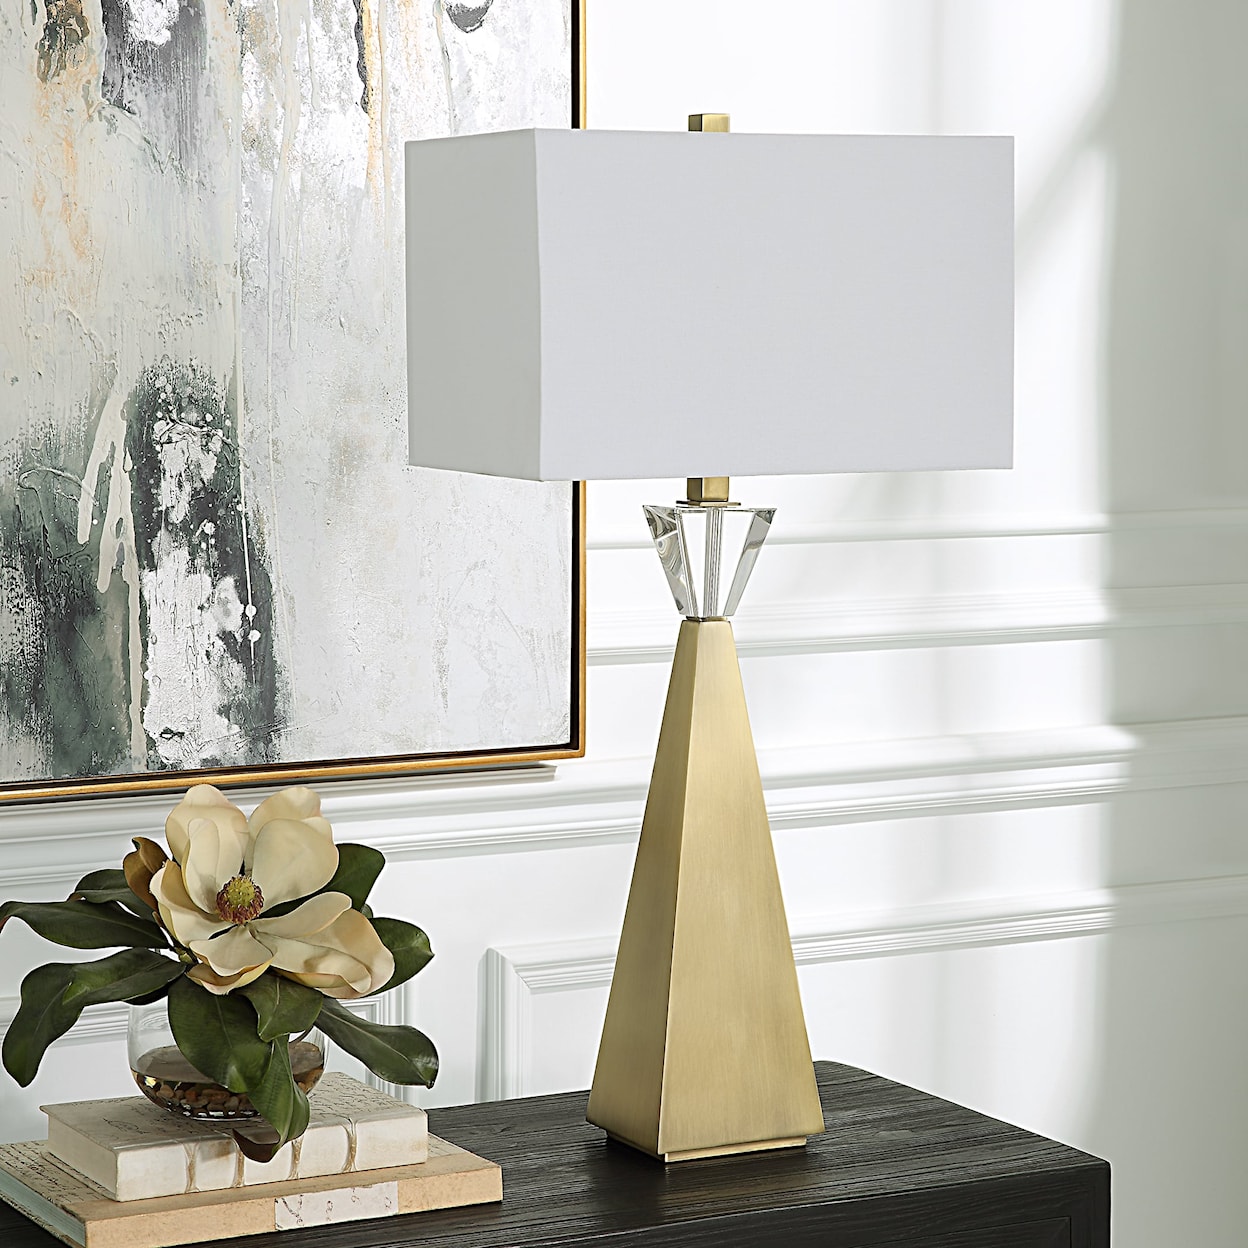 Uttermost Arete Arete Modern Brass Table Lamp